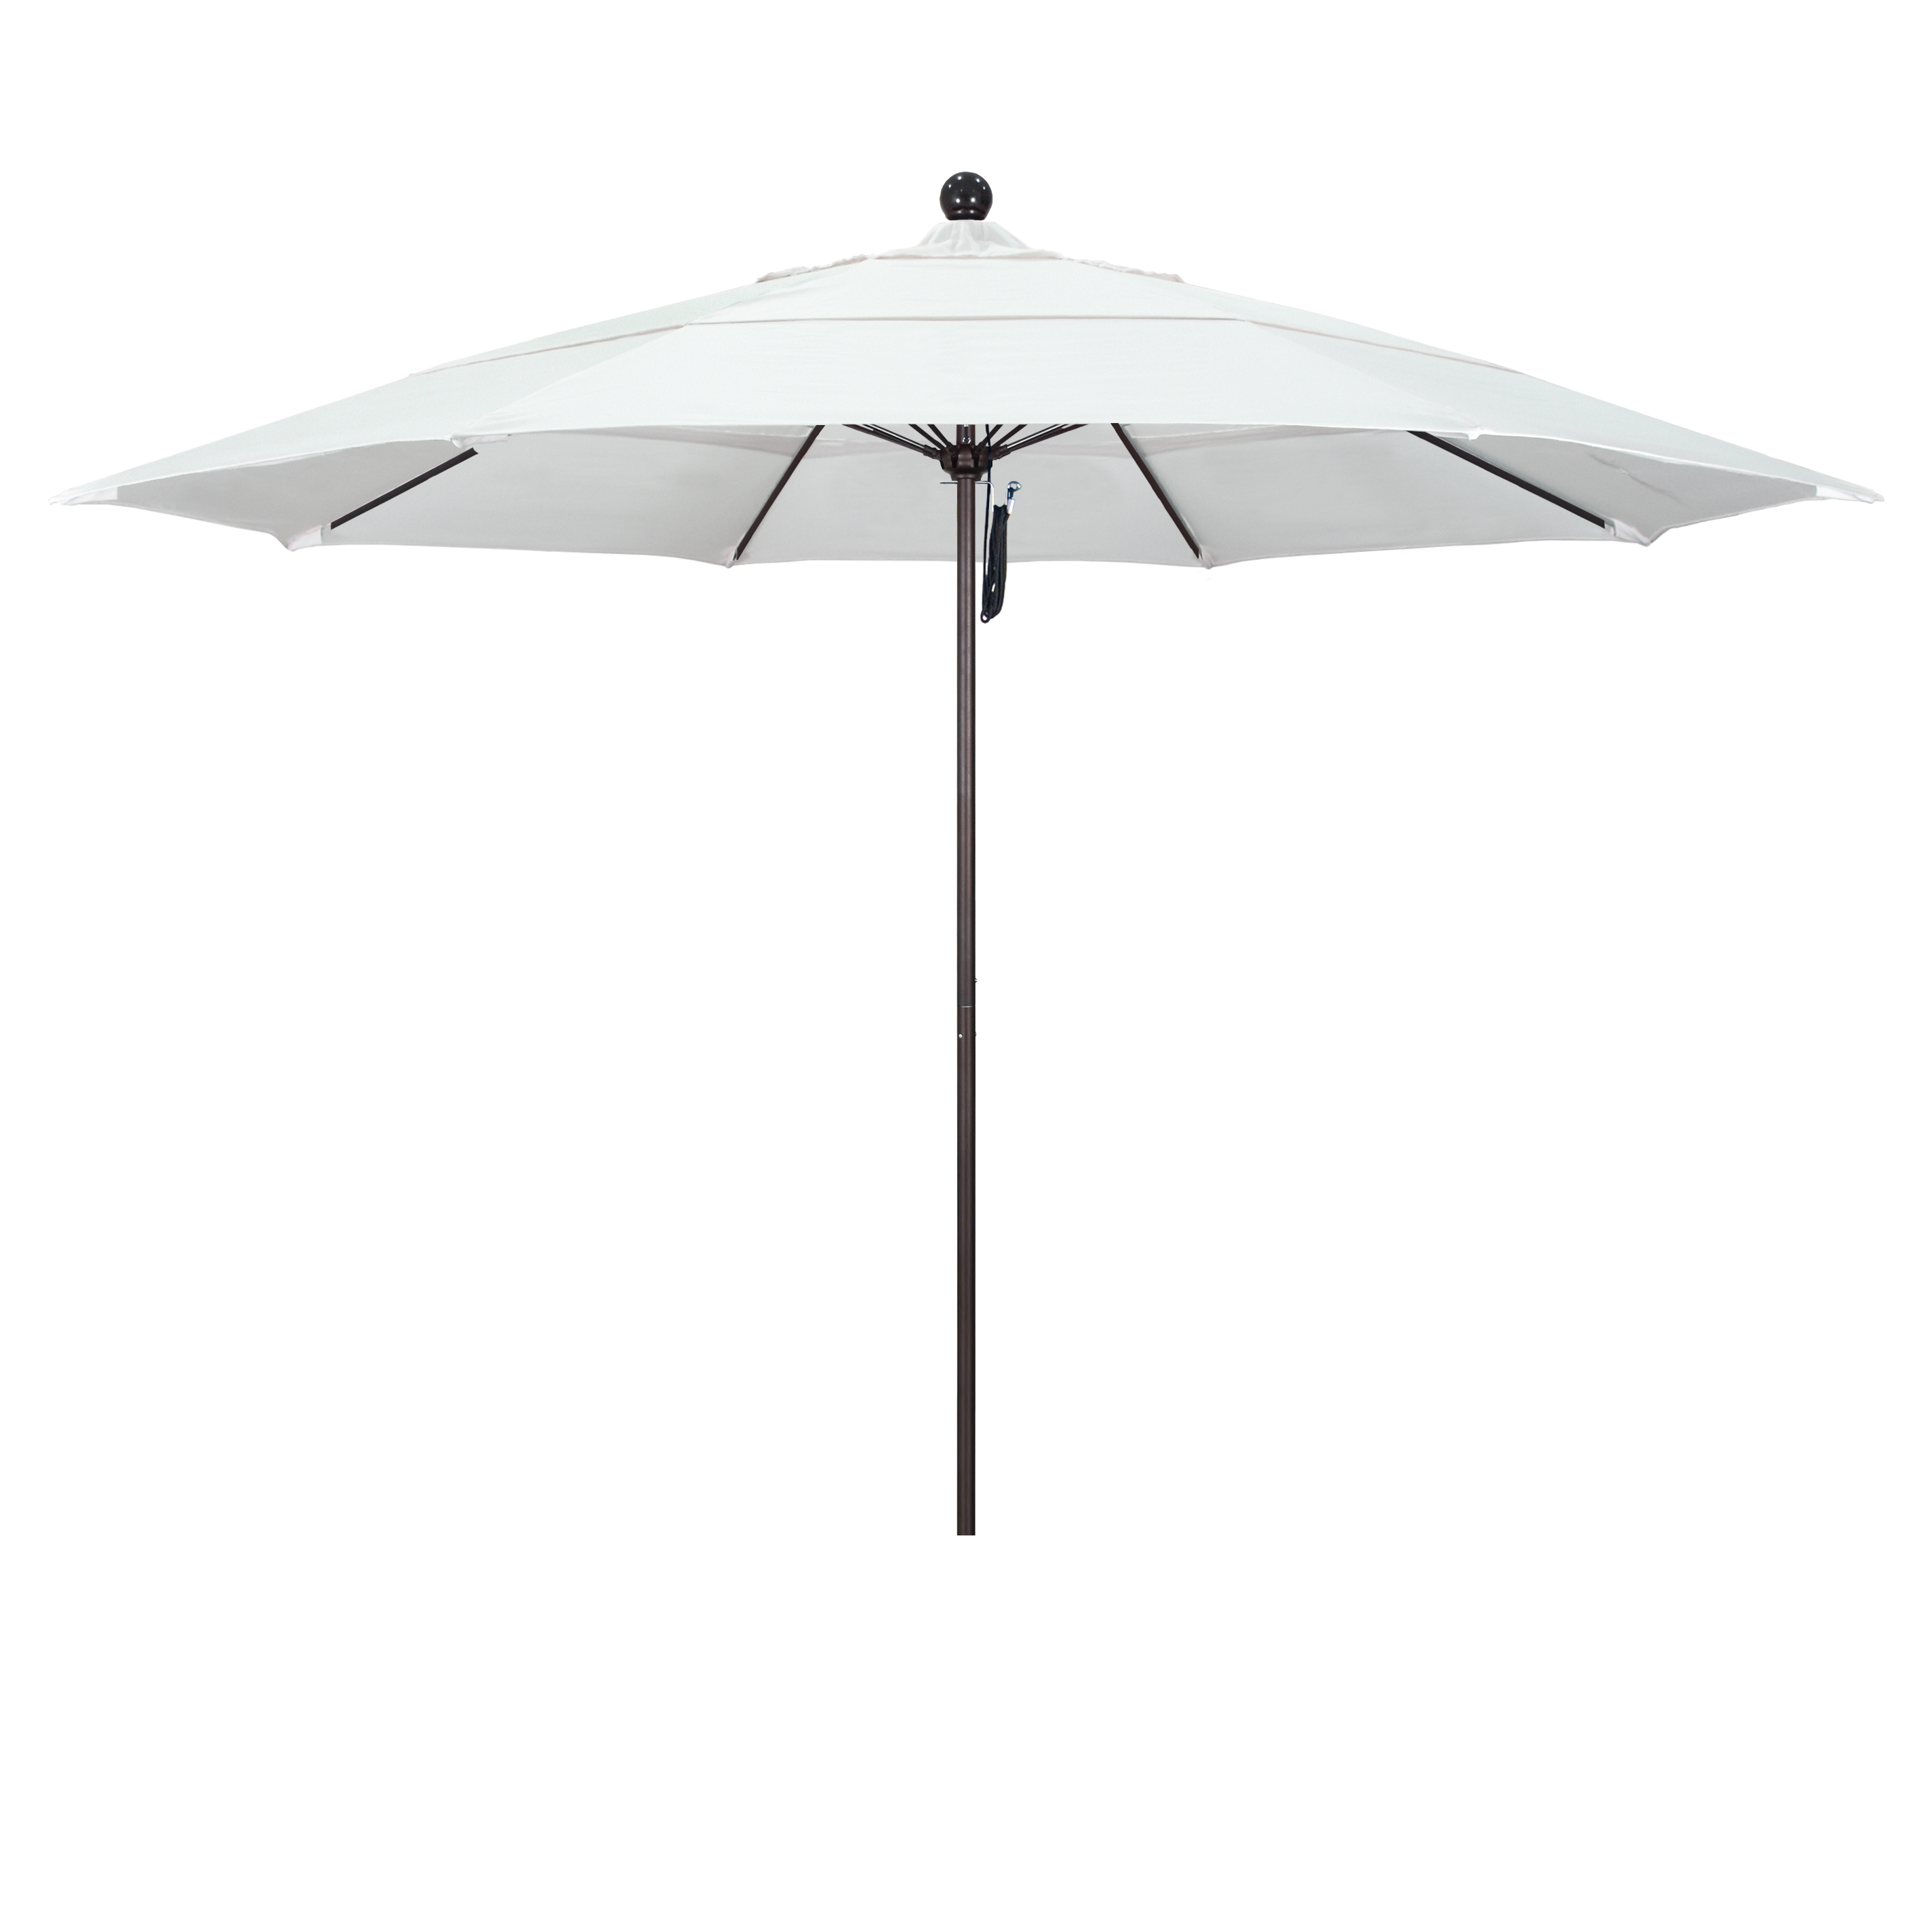 Picture of California Umbrella ALTO118117-5404-DWV 11 ft. Fiberglass Market Umbrella PO DVent Bronze-Sunbrella-Natural